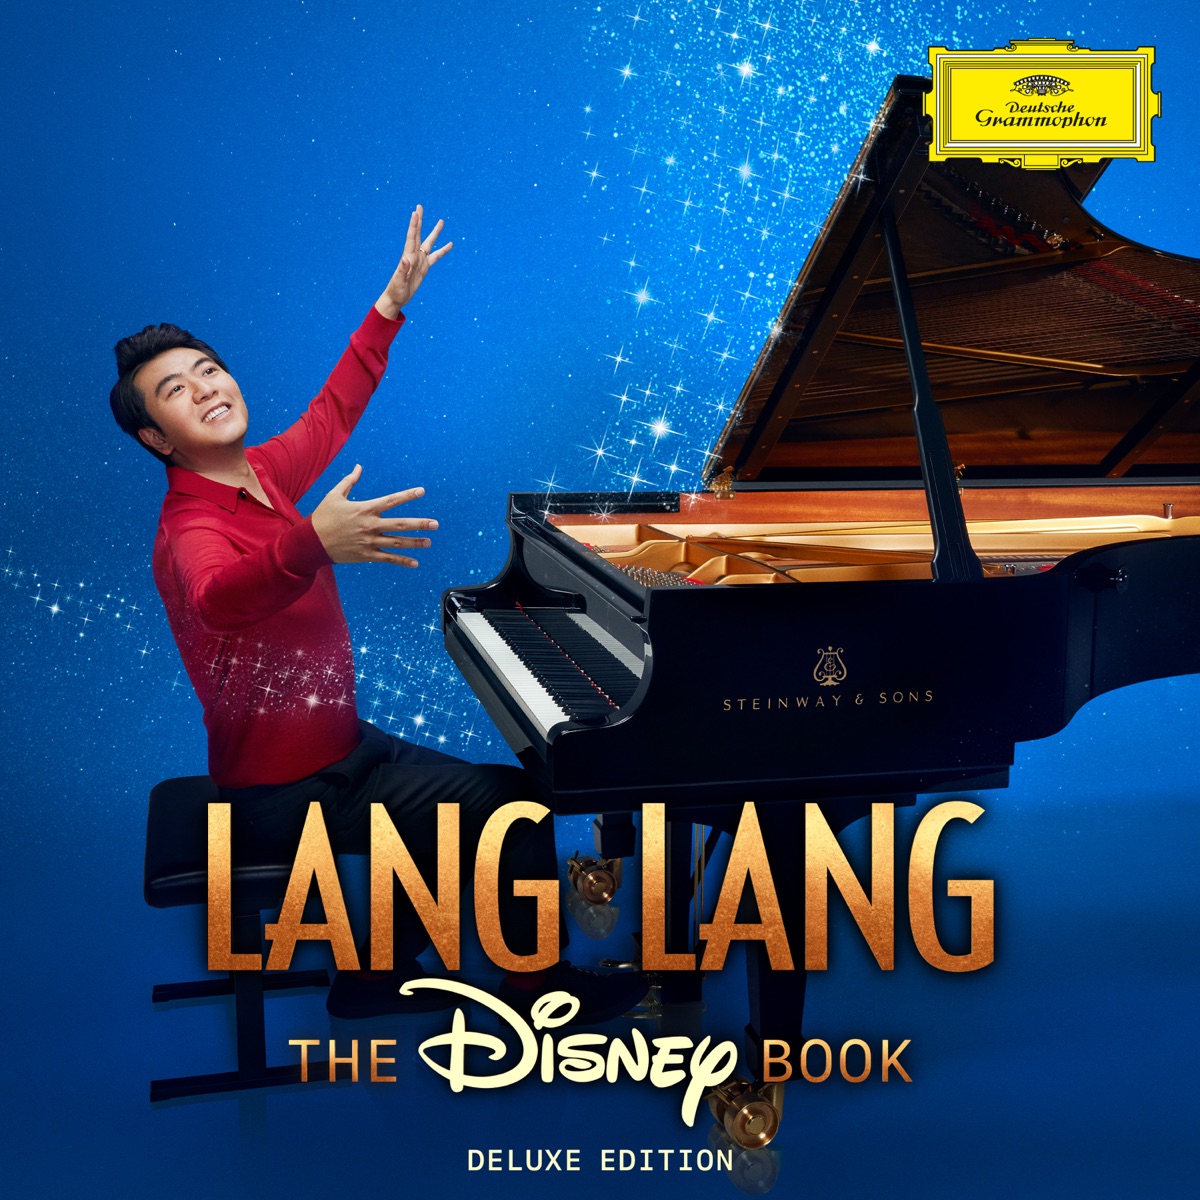 Liszt - My Piano Hero (Deluxe Edition) par Lang Lang sur Apple Music